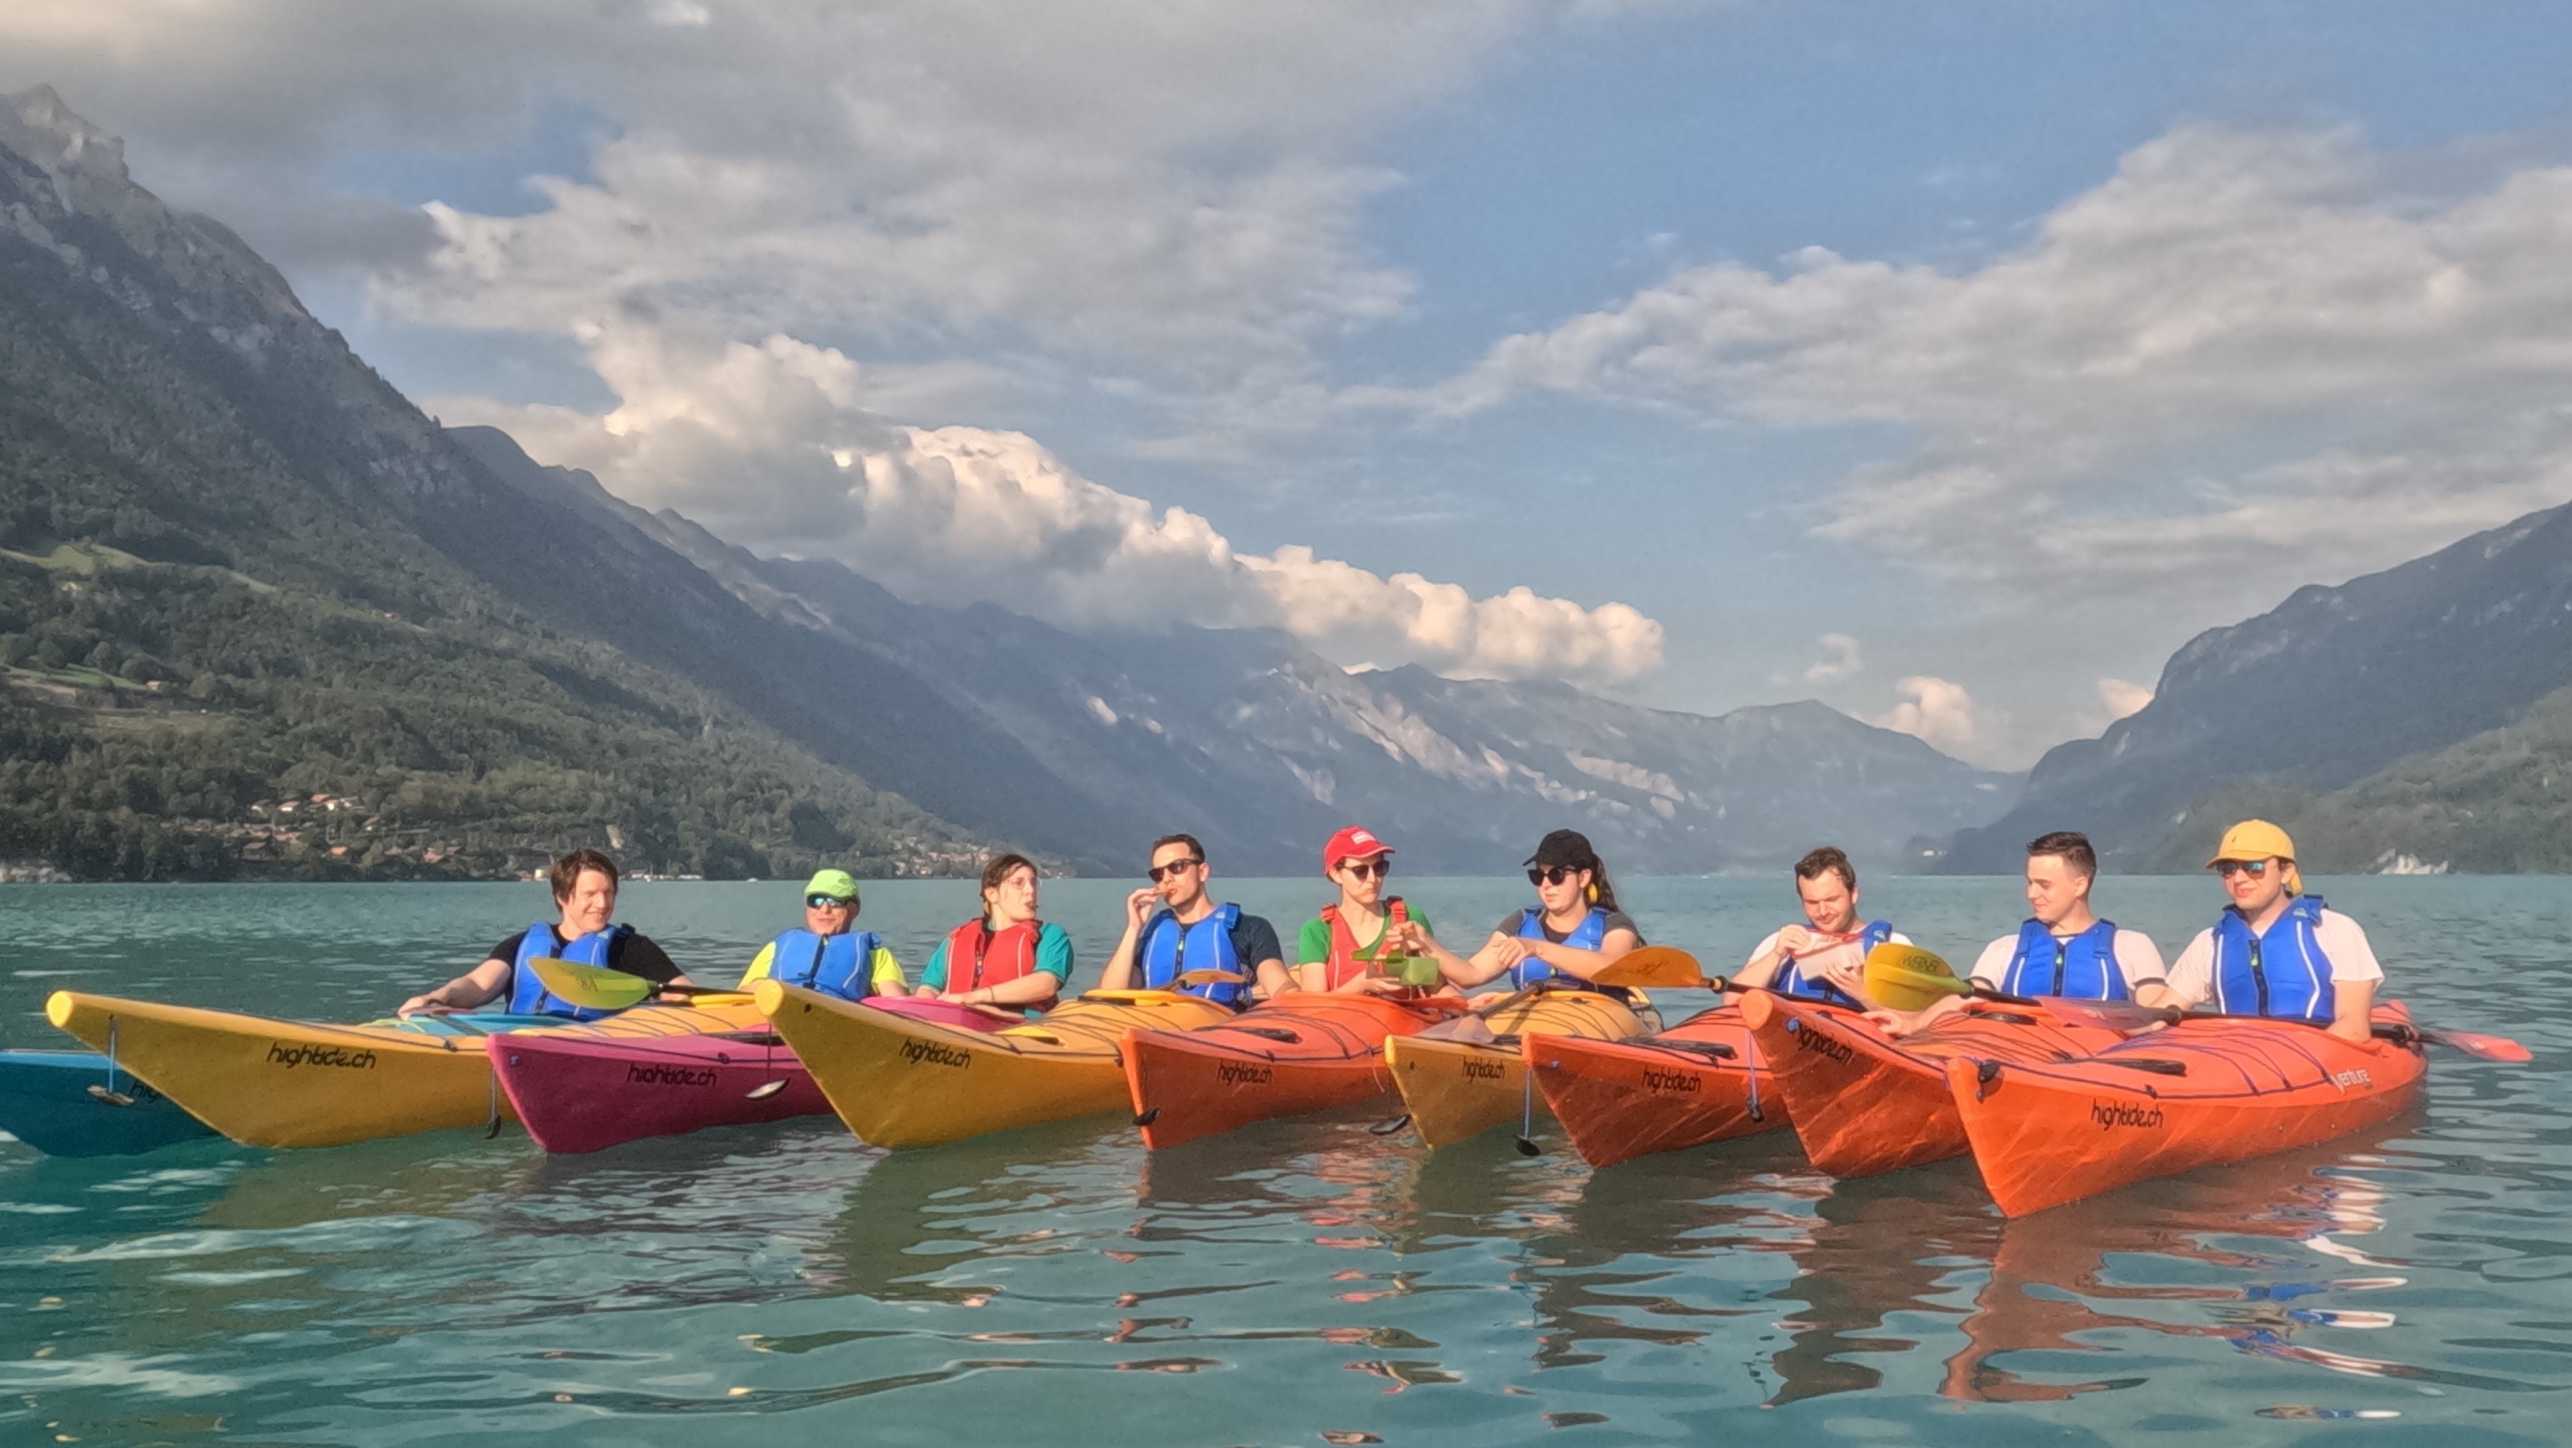 Chen aroup at group outing 2023, kayaking on Lake Brienz